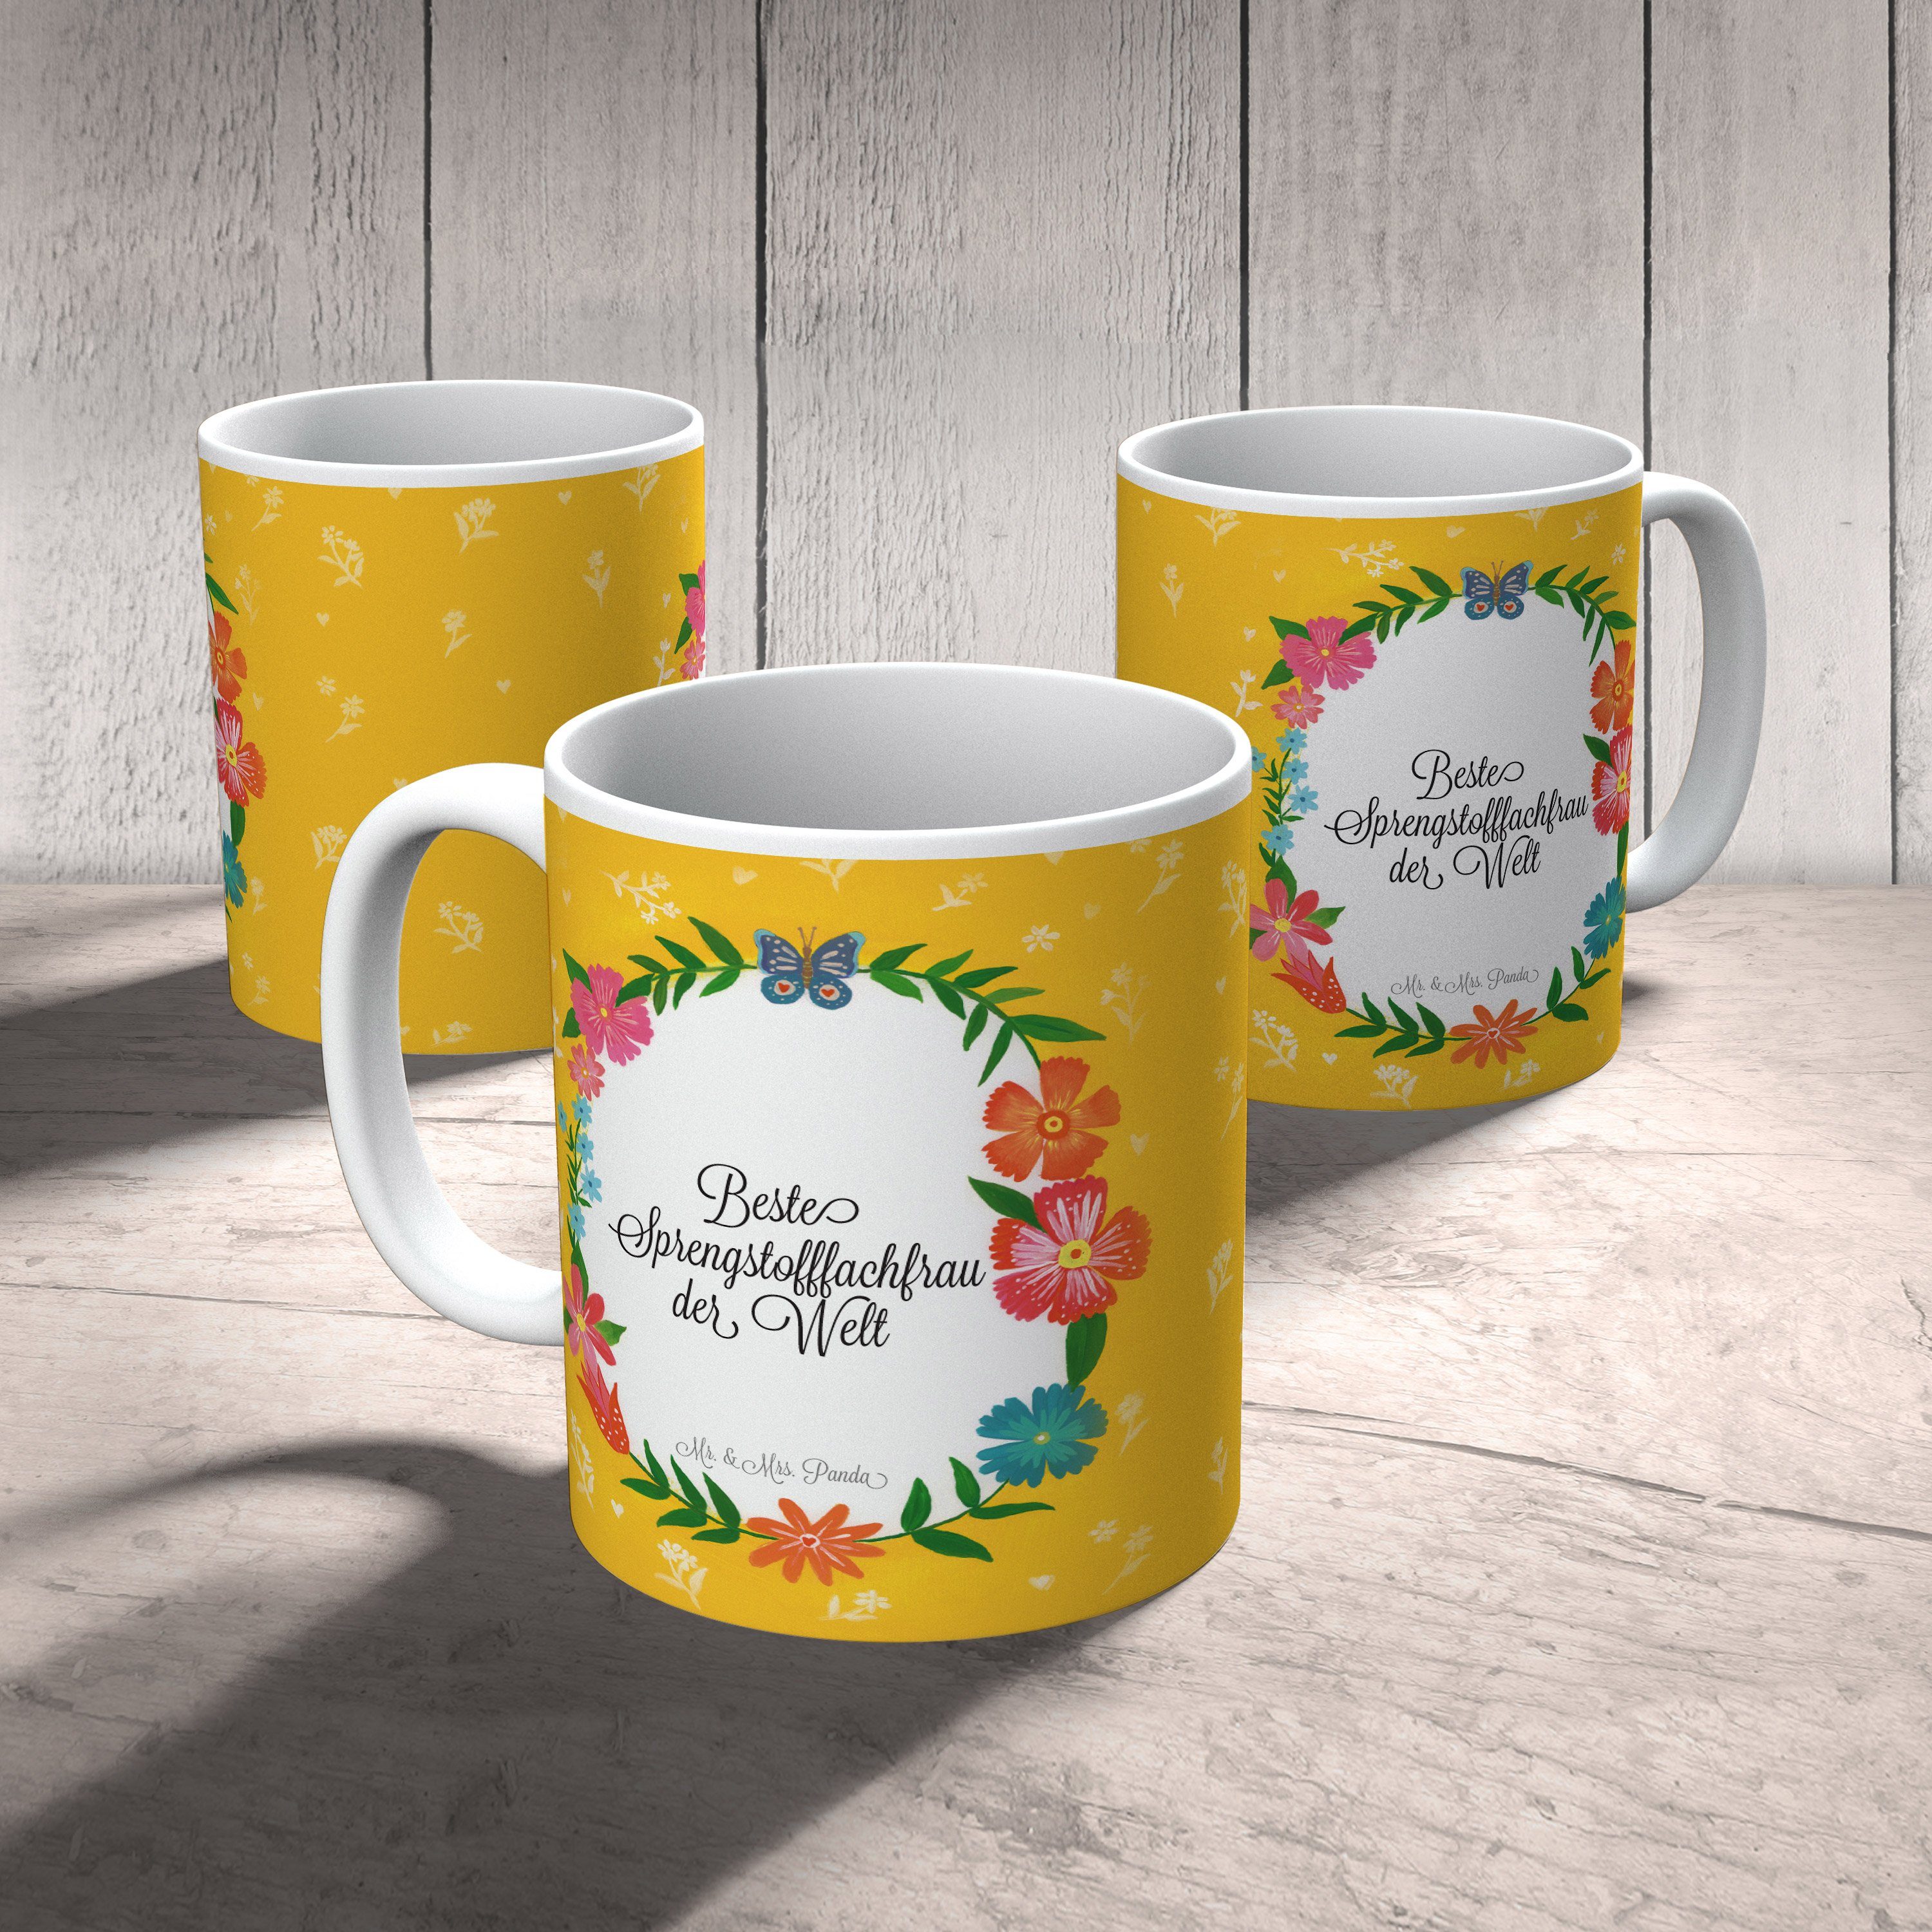 Mr. & Kaffeebecher, Tasse, - Mrs. Rente, Geschenk, Geschenk Keramik Sprengstofffachfrau Tasse Panda